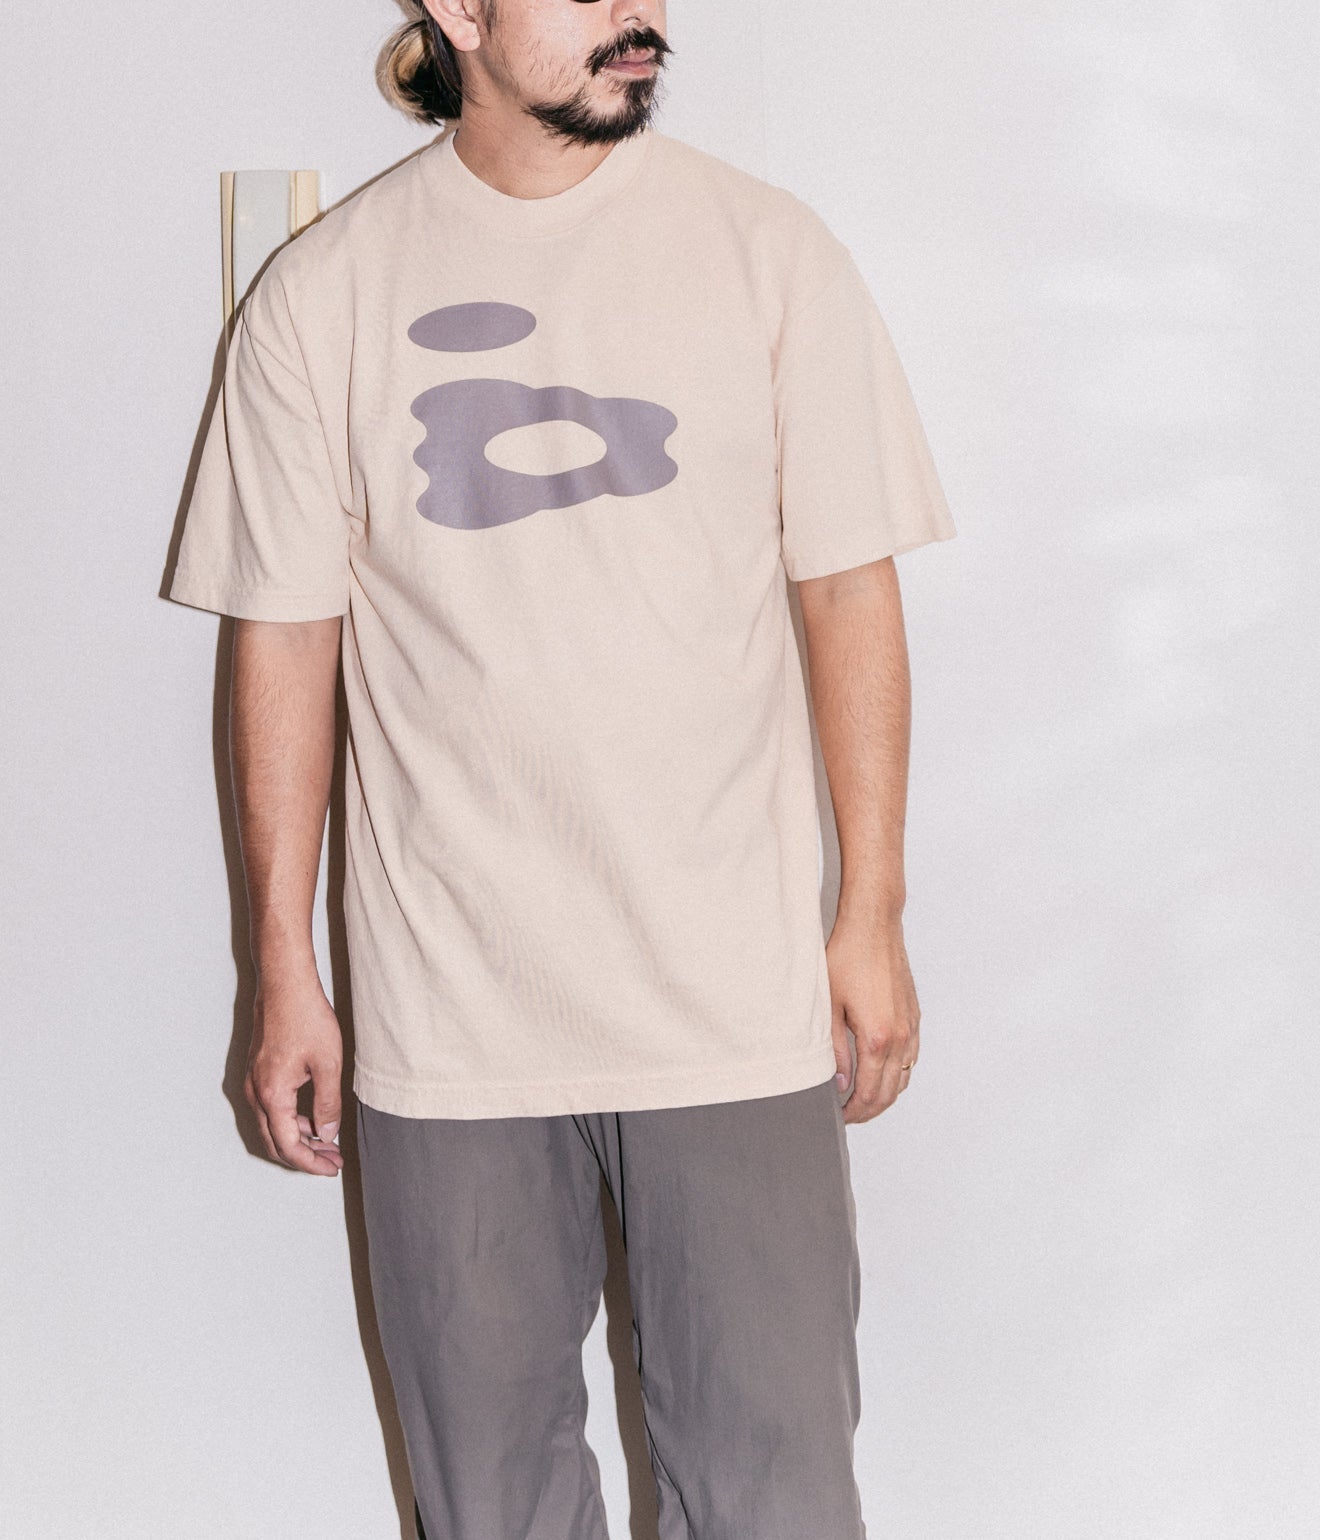 b.Eautiful "b-mode T-Shirt" Beige / Grey - WEAREALLANIMALS